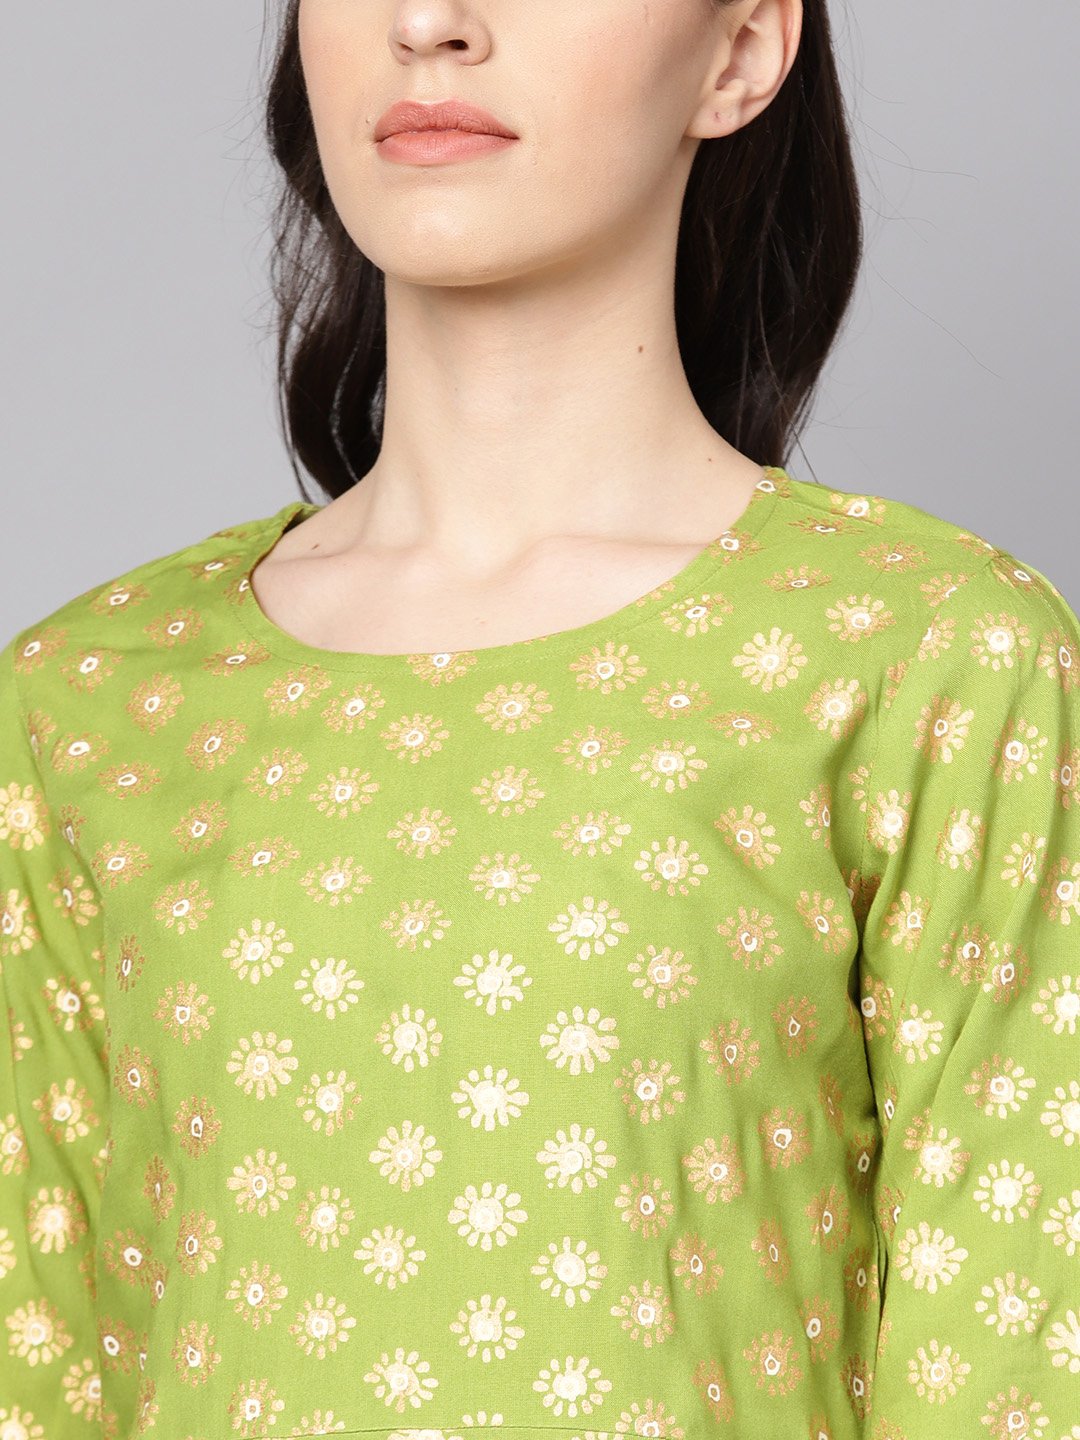 Women's Green Printed 3/4Th Sleeve Rayon Printed Kurta - Nayo Clothing